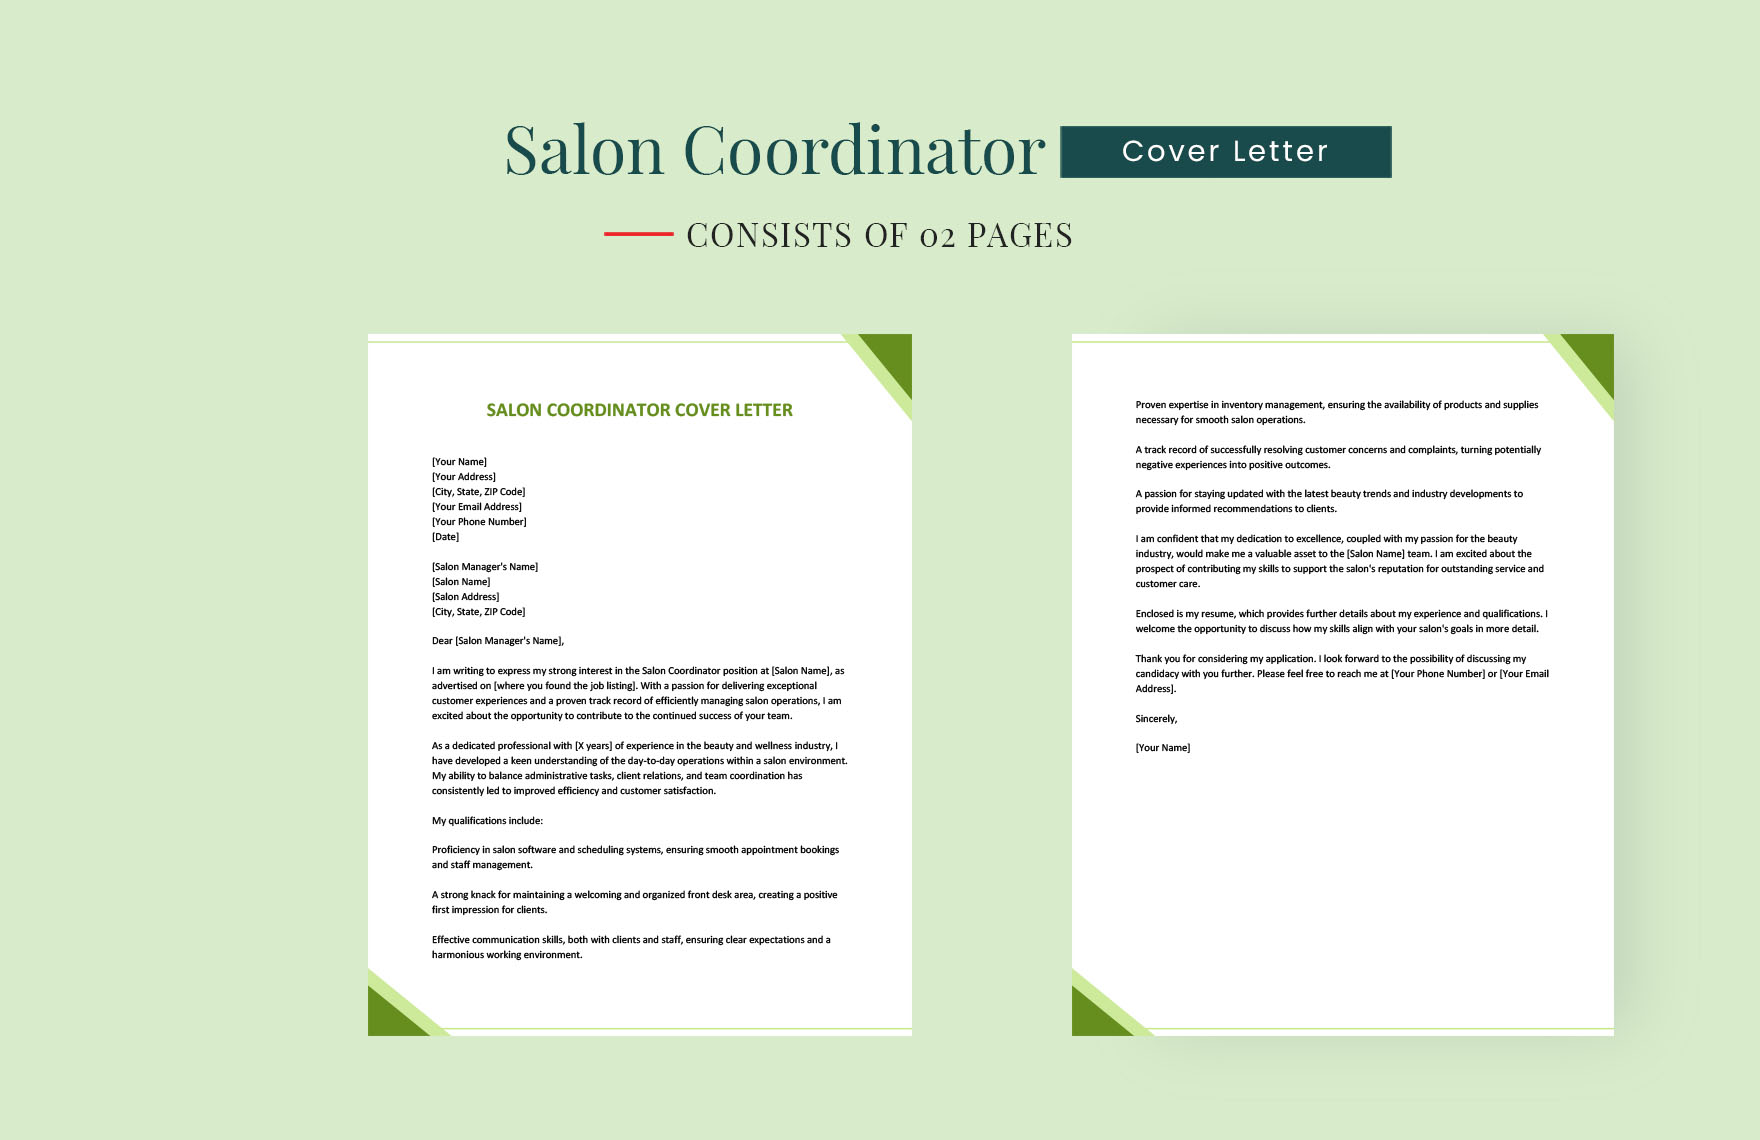 Salon Coordinator Cover Letter in Word, Google Docs